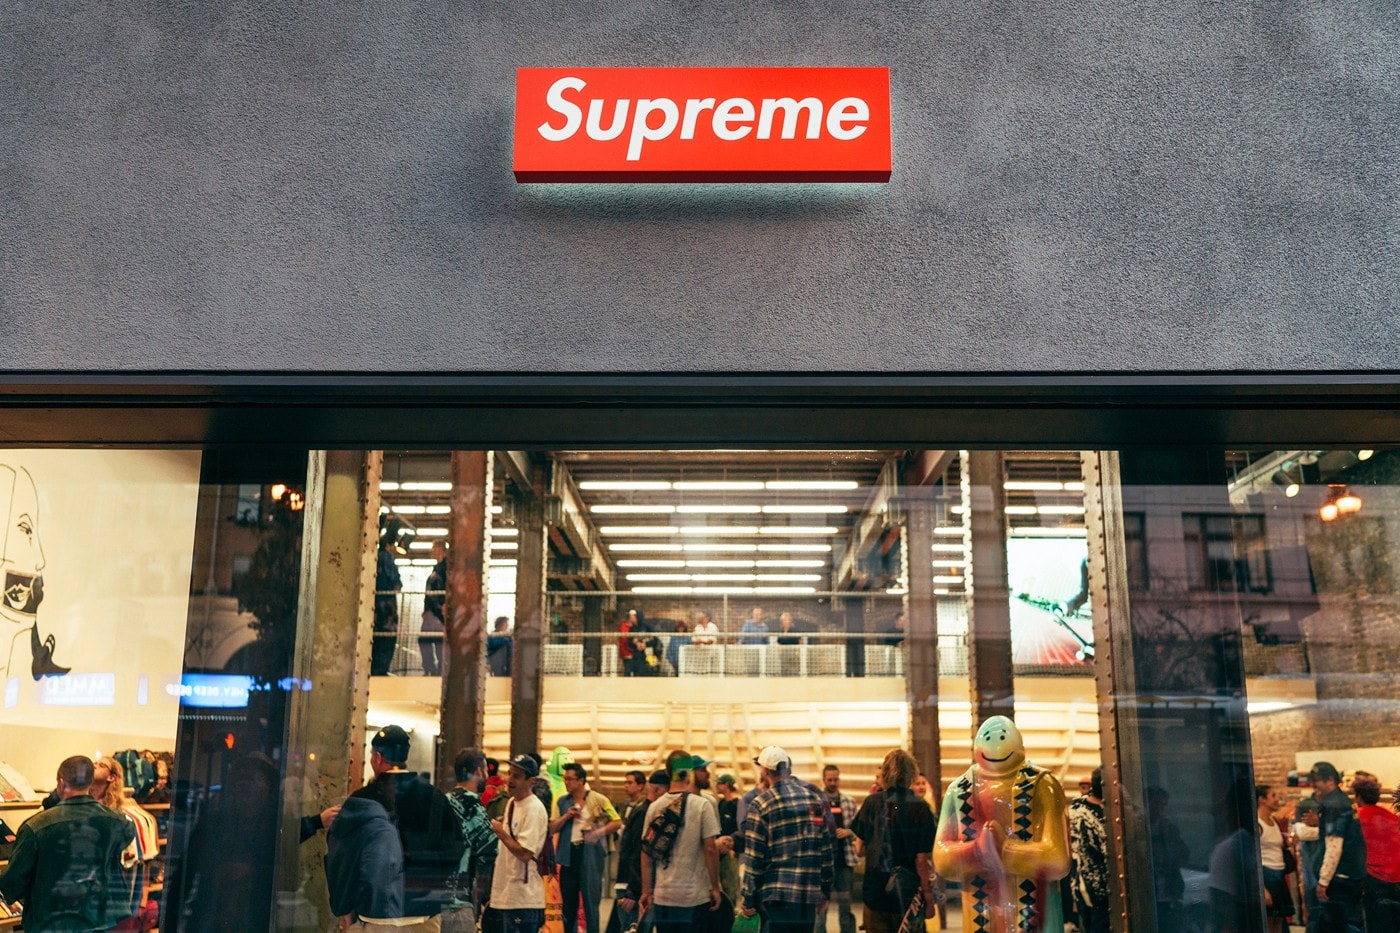 2019 Supreme Box logo collection : r/supremeclothing